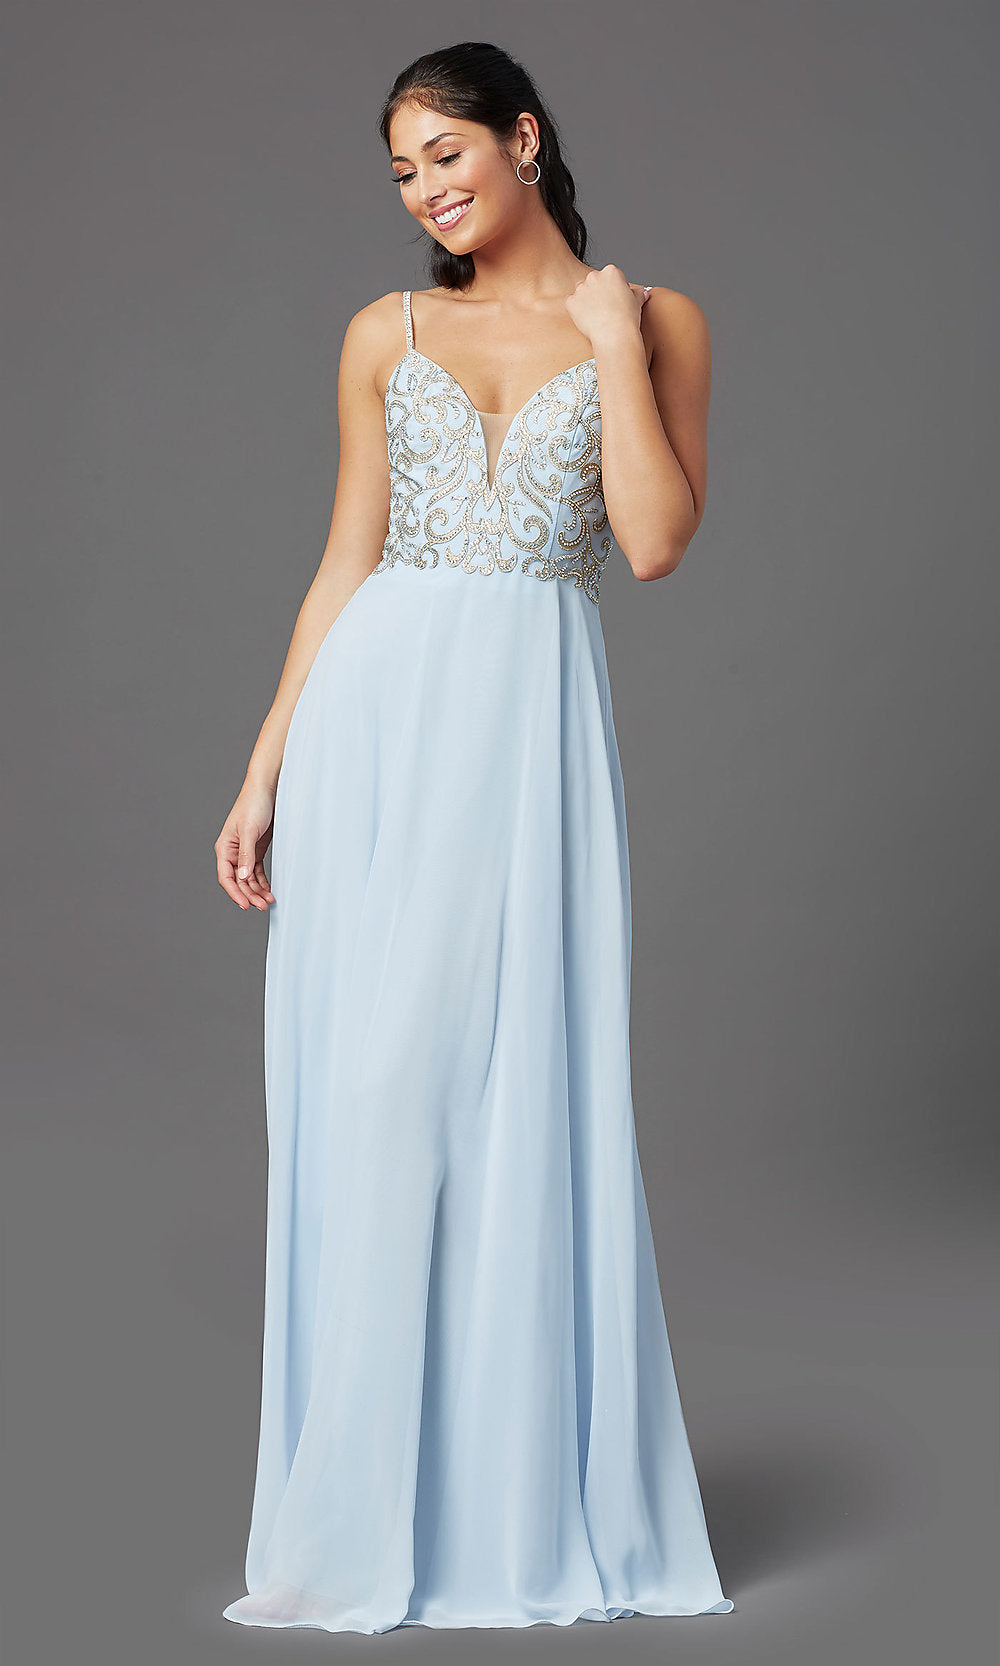 Narianna-Corset-Back Long Blue Formal Prom Dress